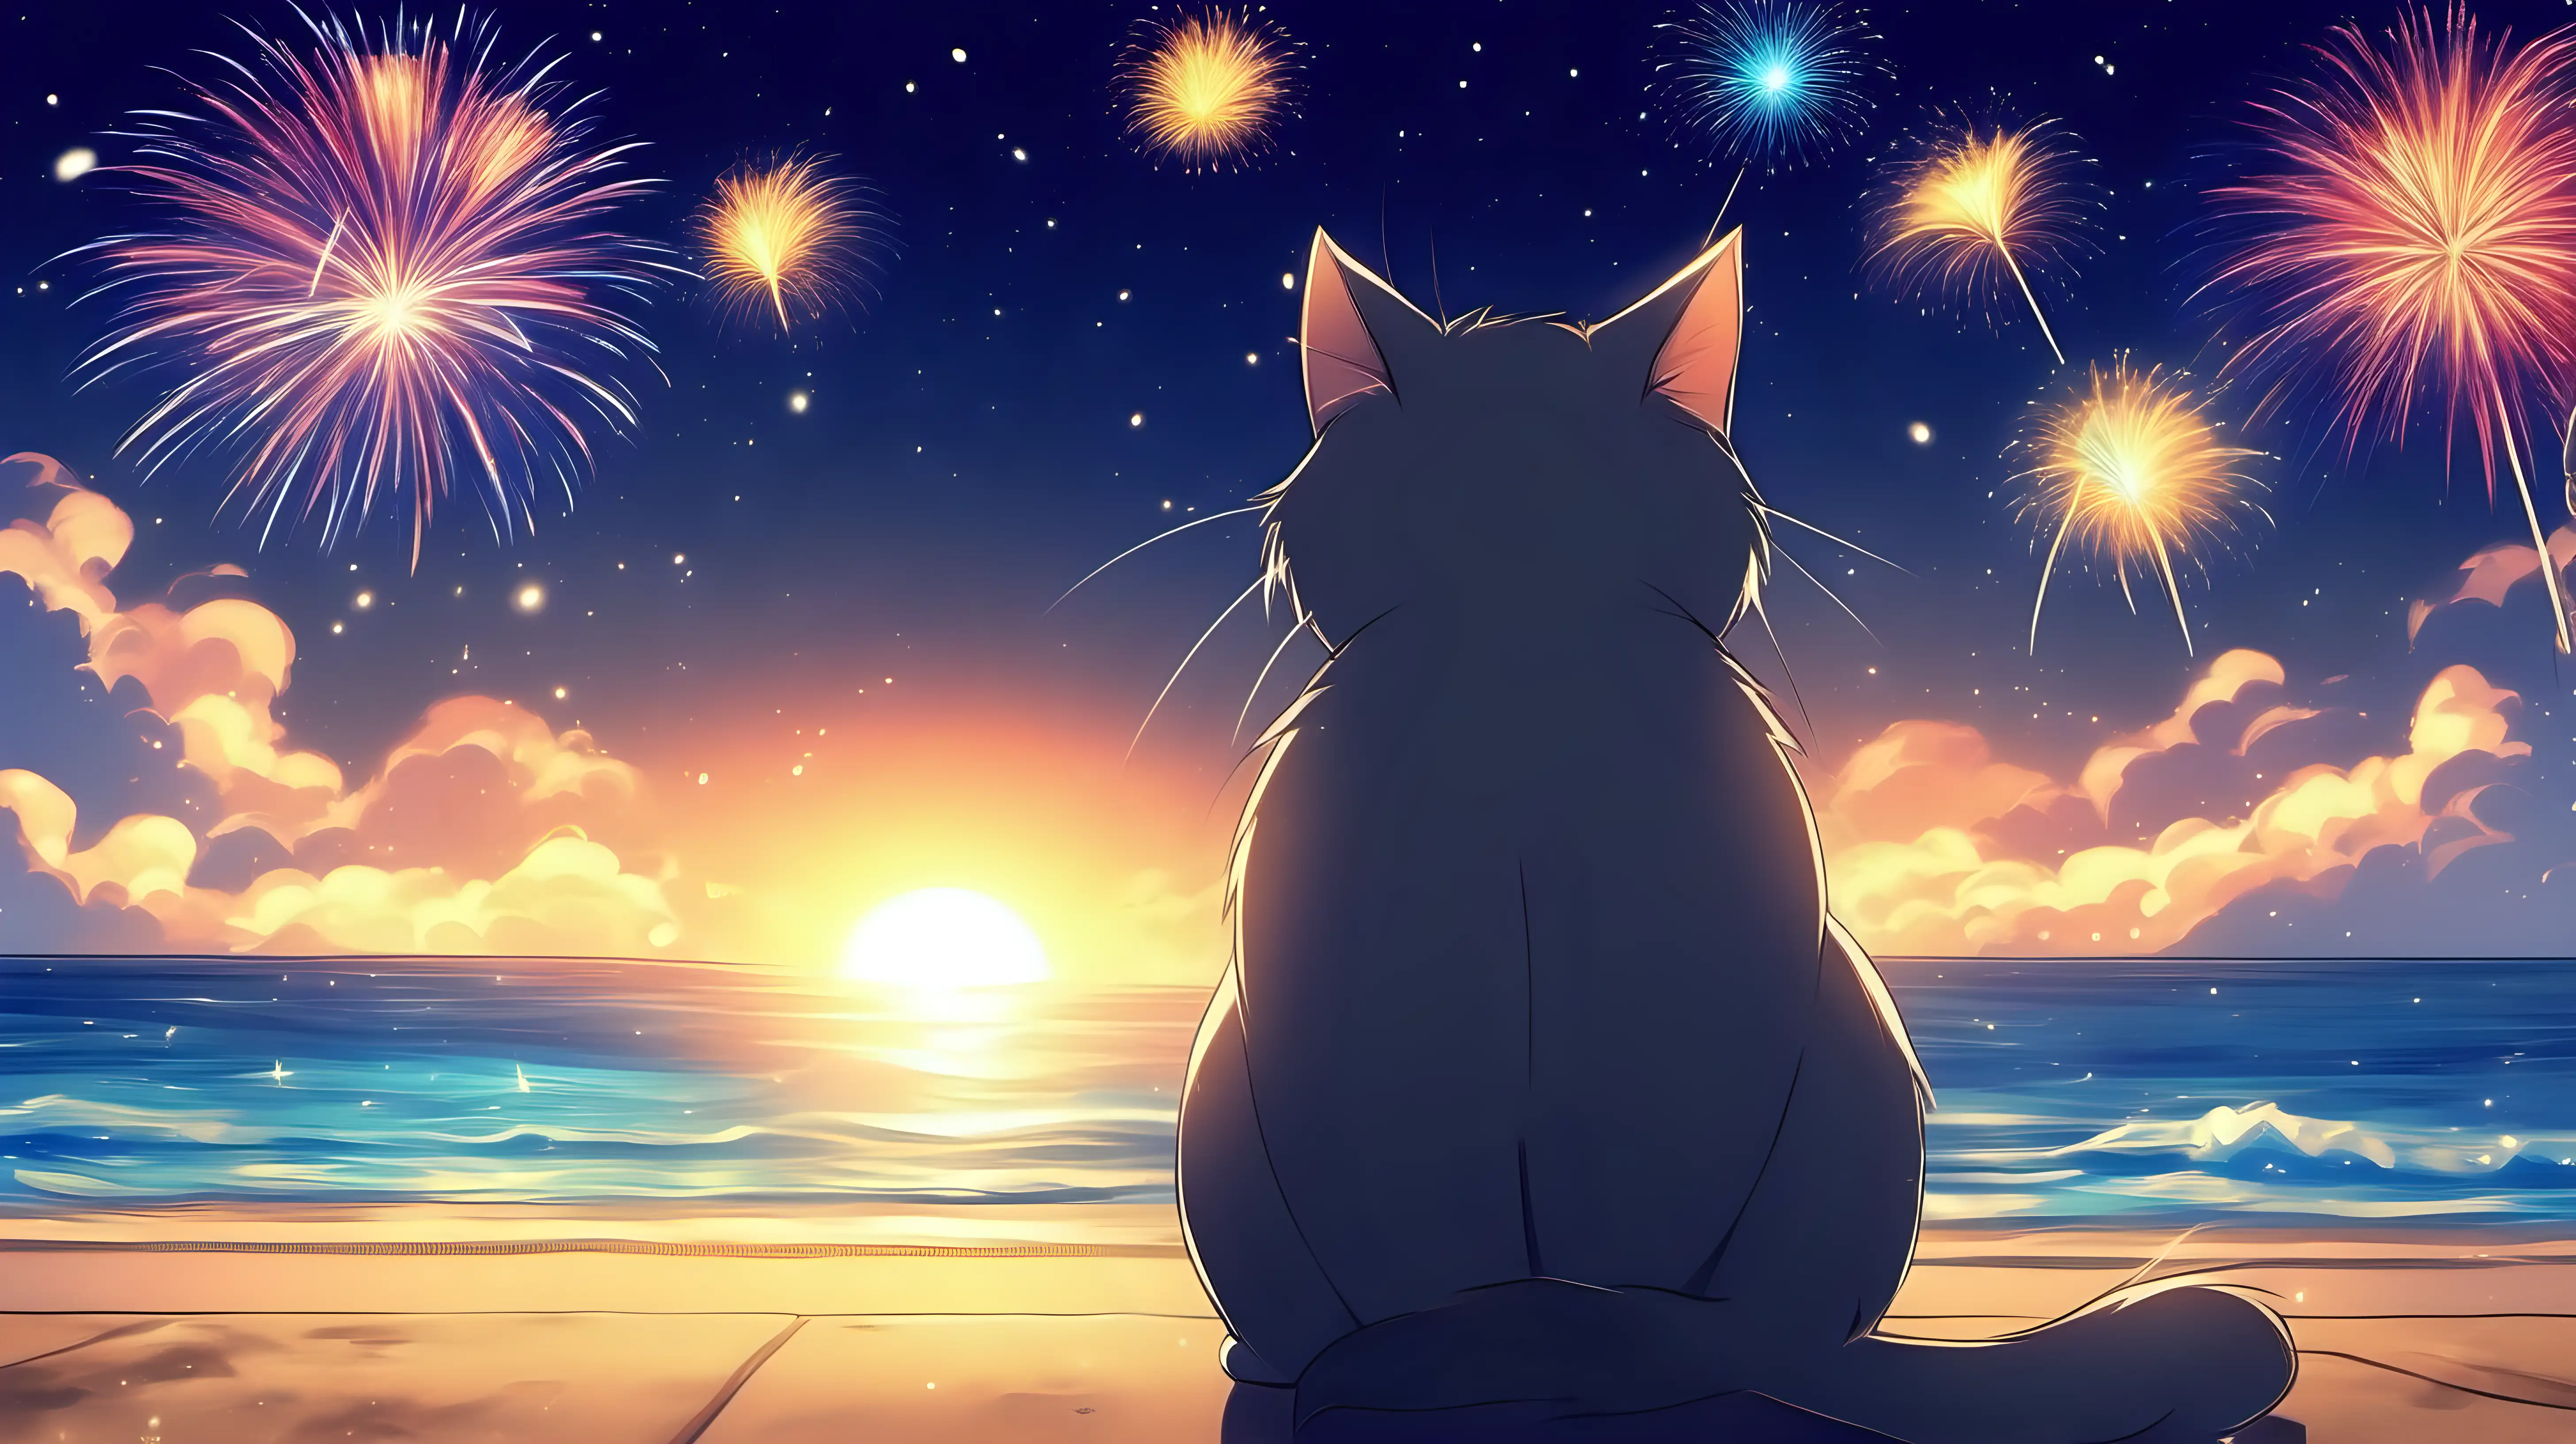 a cute cat in sad mood watching toward sky ,firework in sky,night,beach,cat should be the main focus